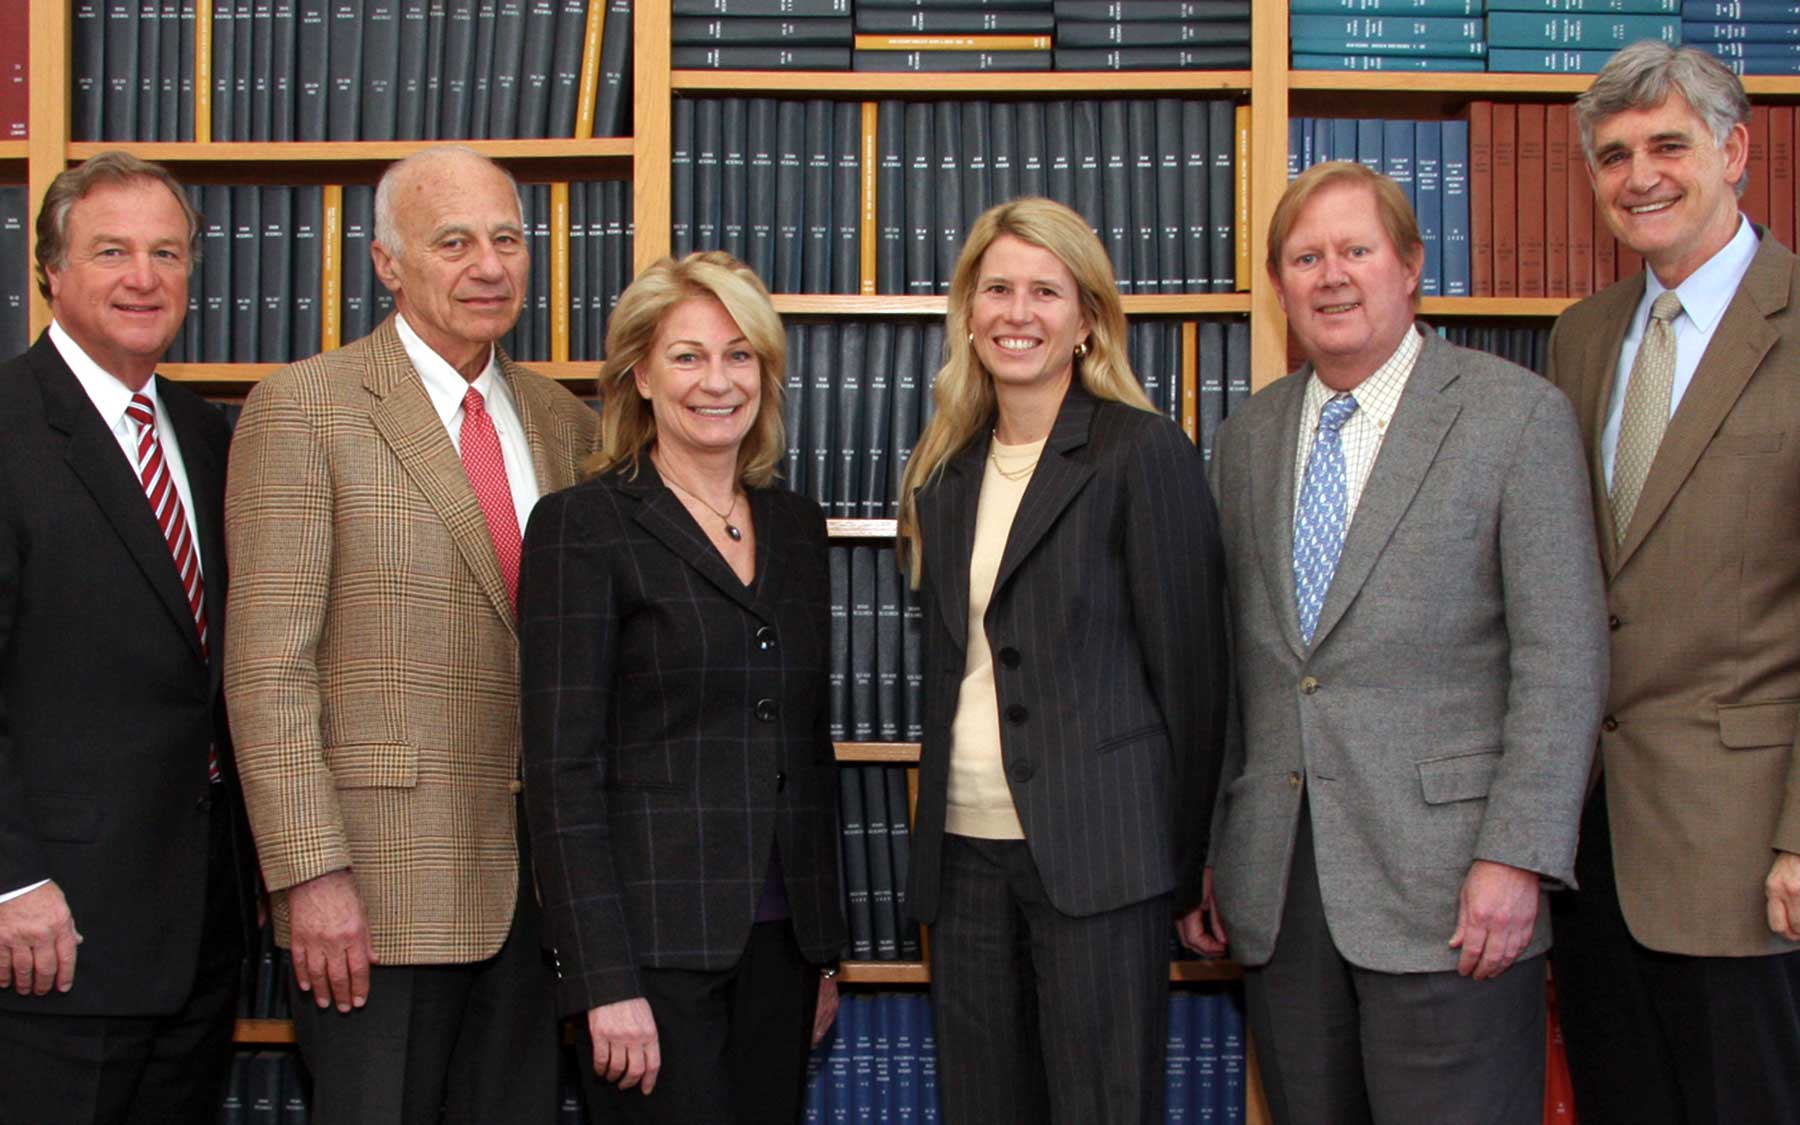 2010 Board of Trustees